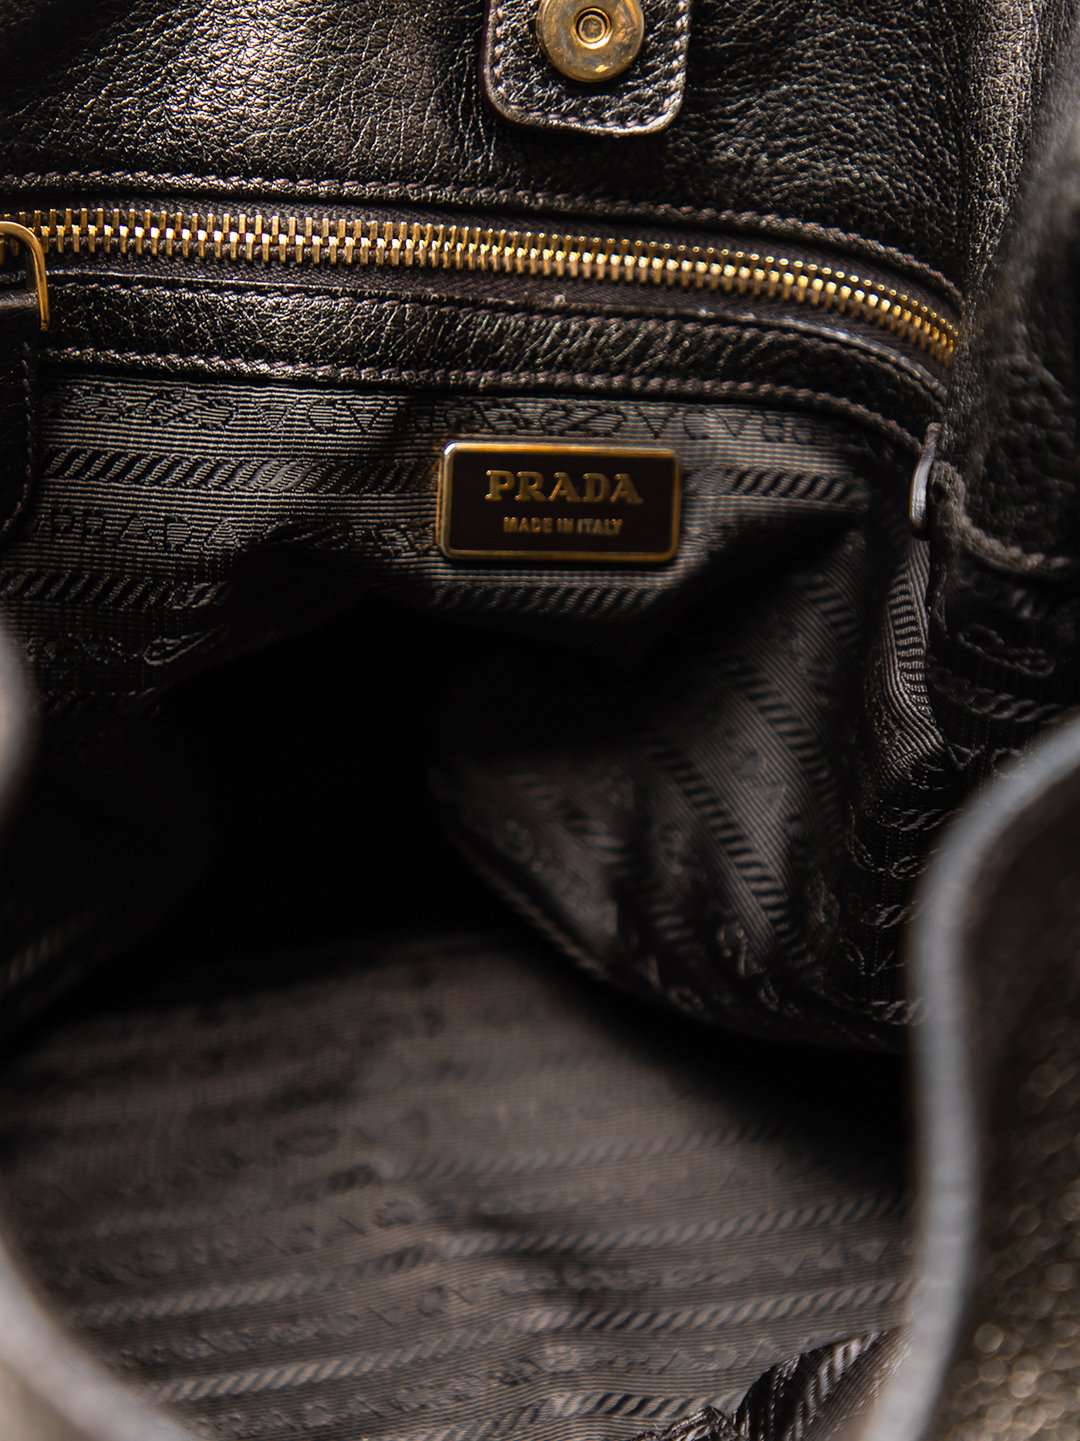 Prada Daino Leather Top Handle Hobo Bag